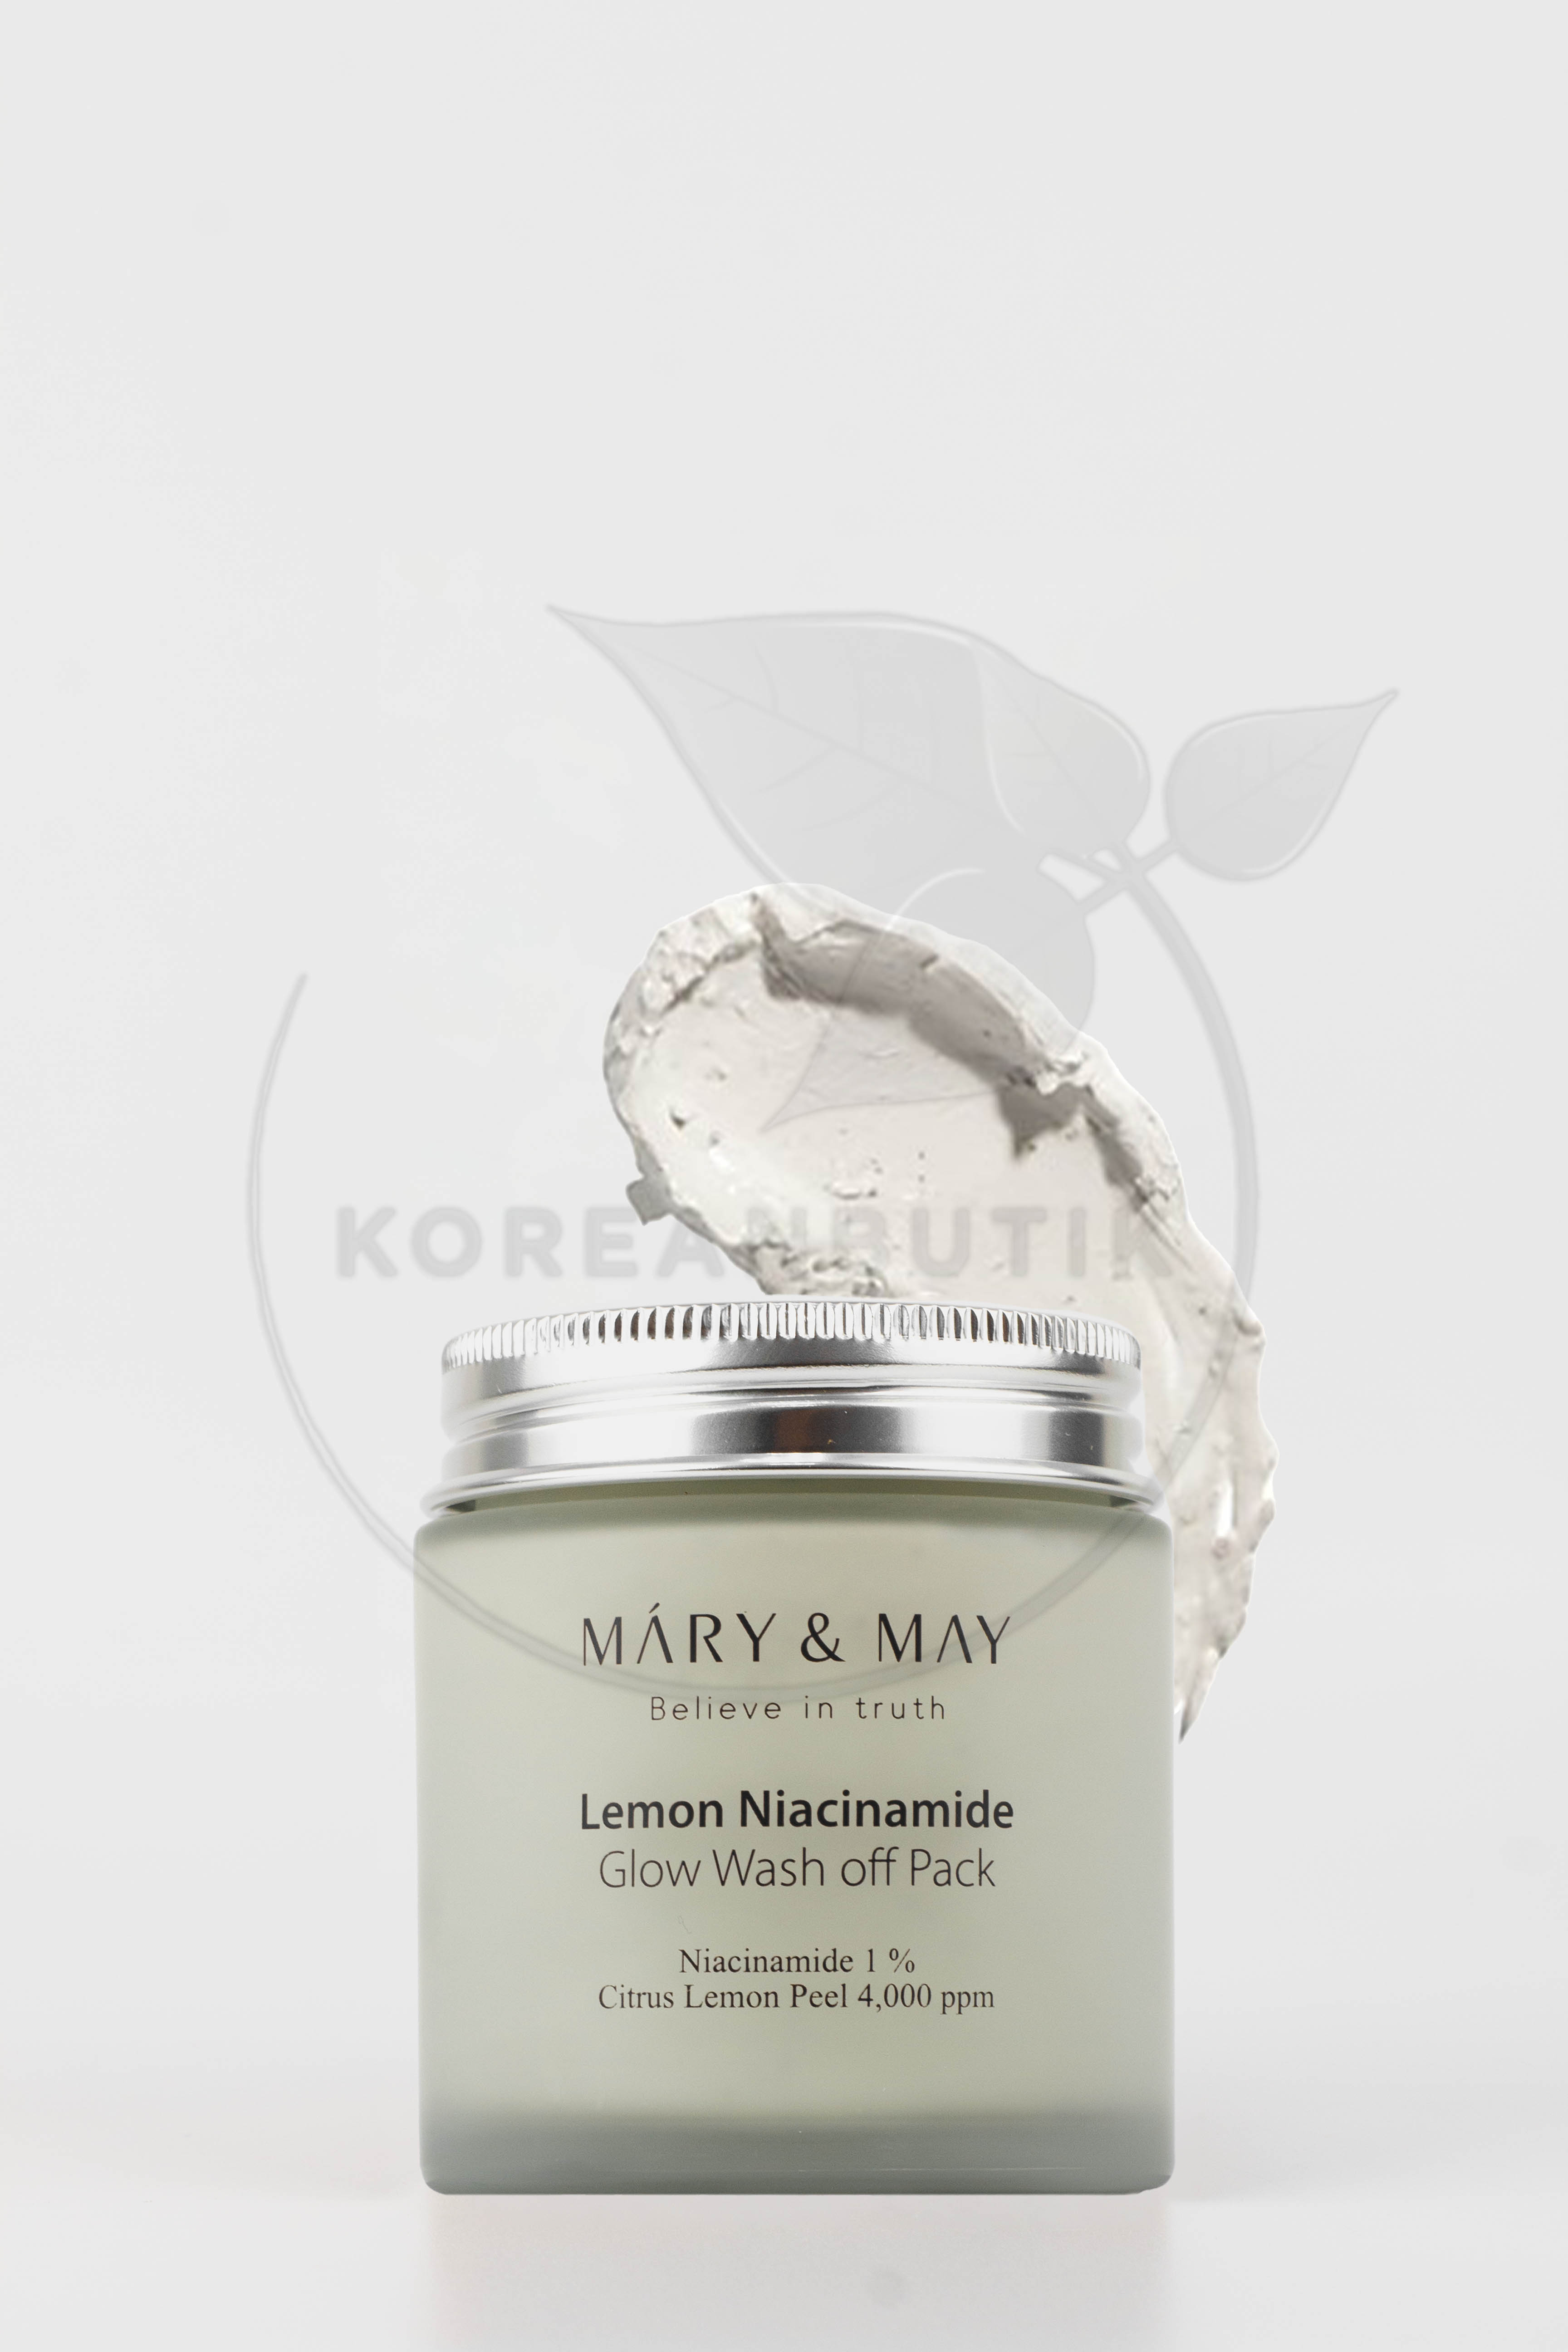  Mary&May Lemon Niacinamide Glow Wash Off Pack 125g 